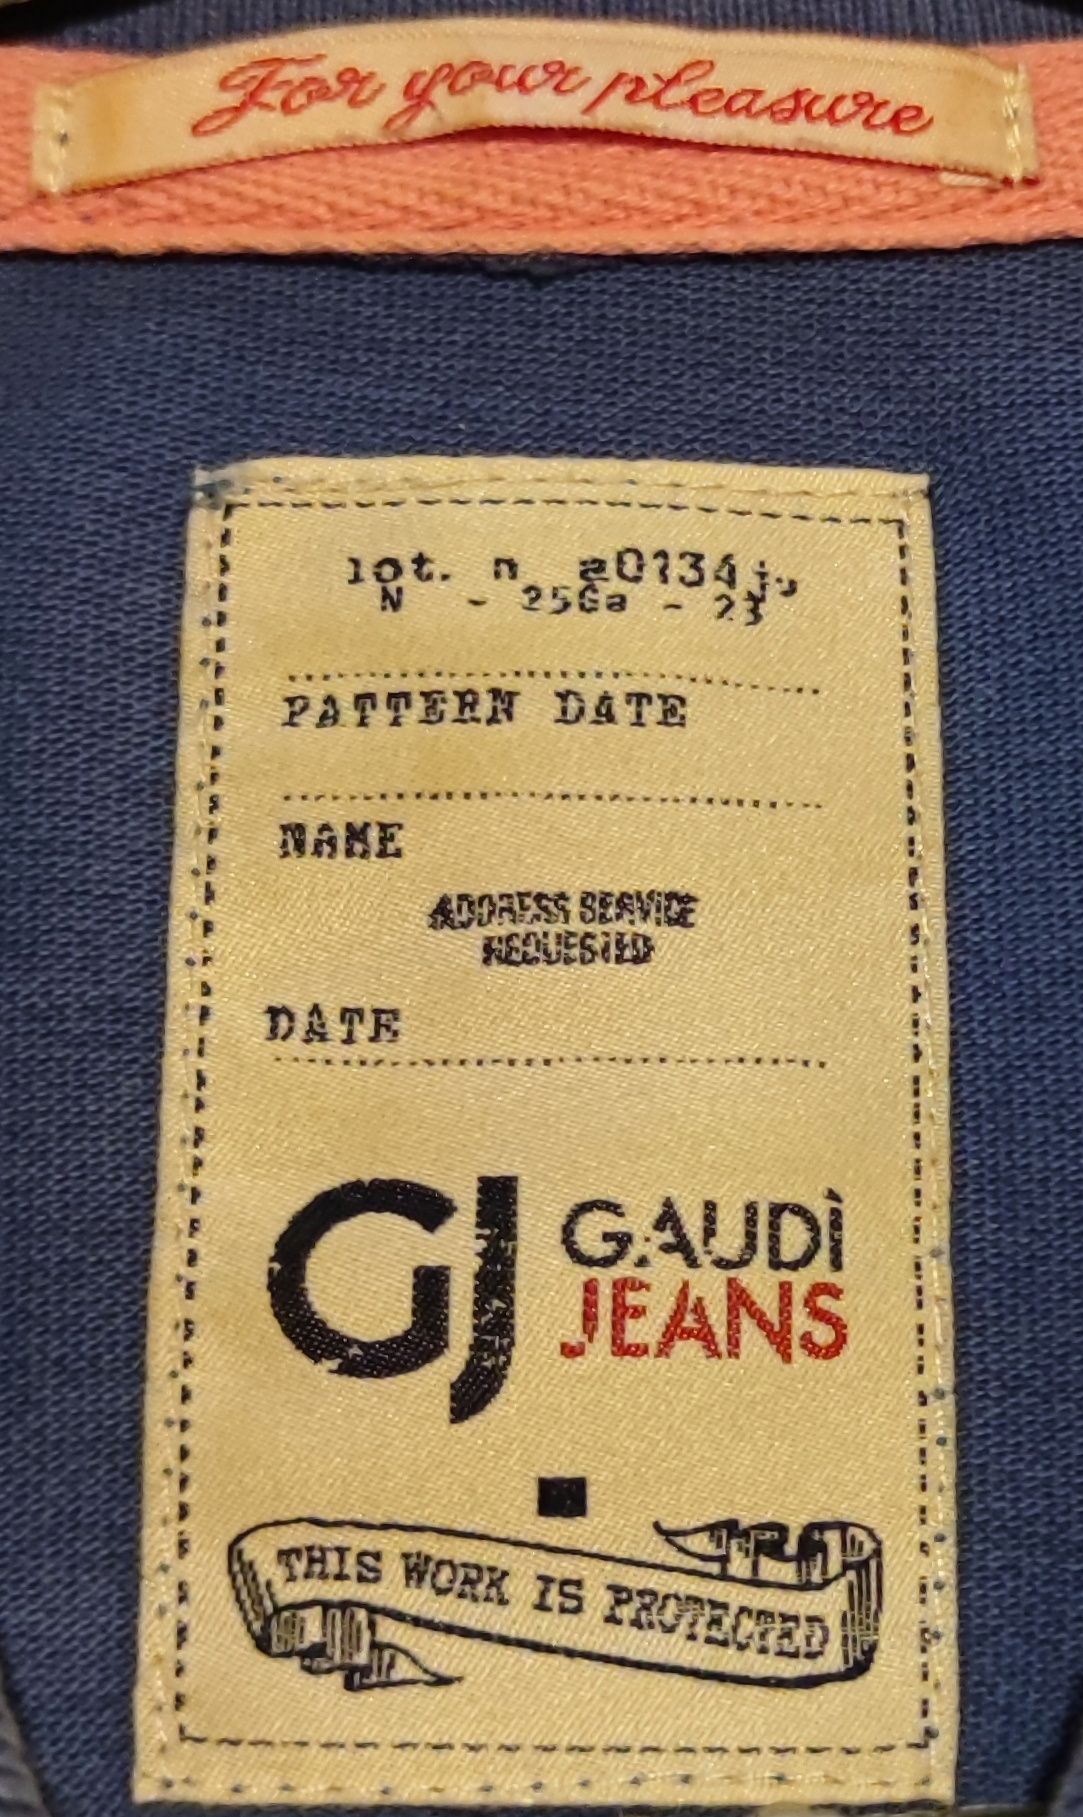 Pólo Gaudí Jeans Original - (M)